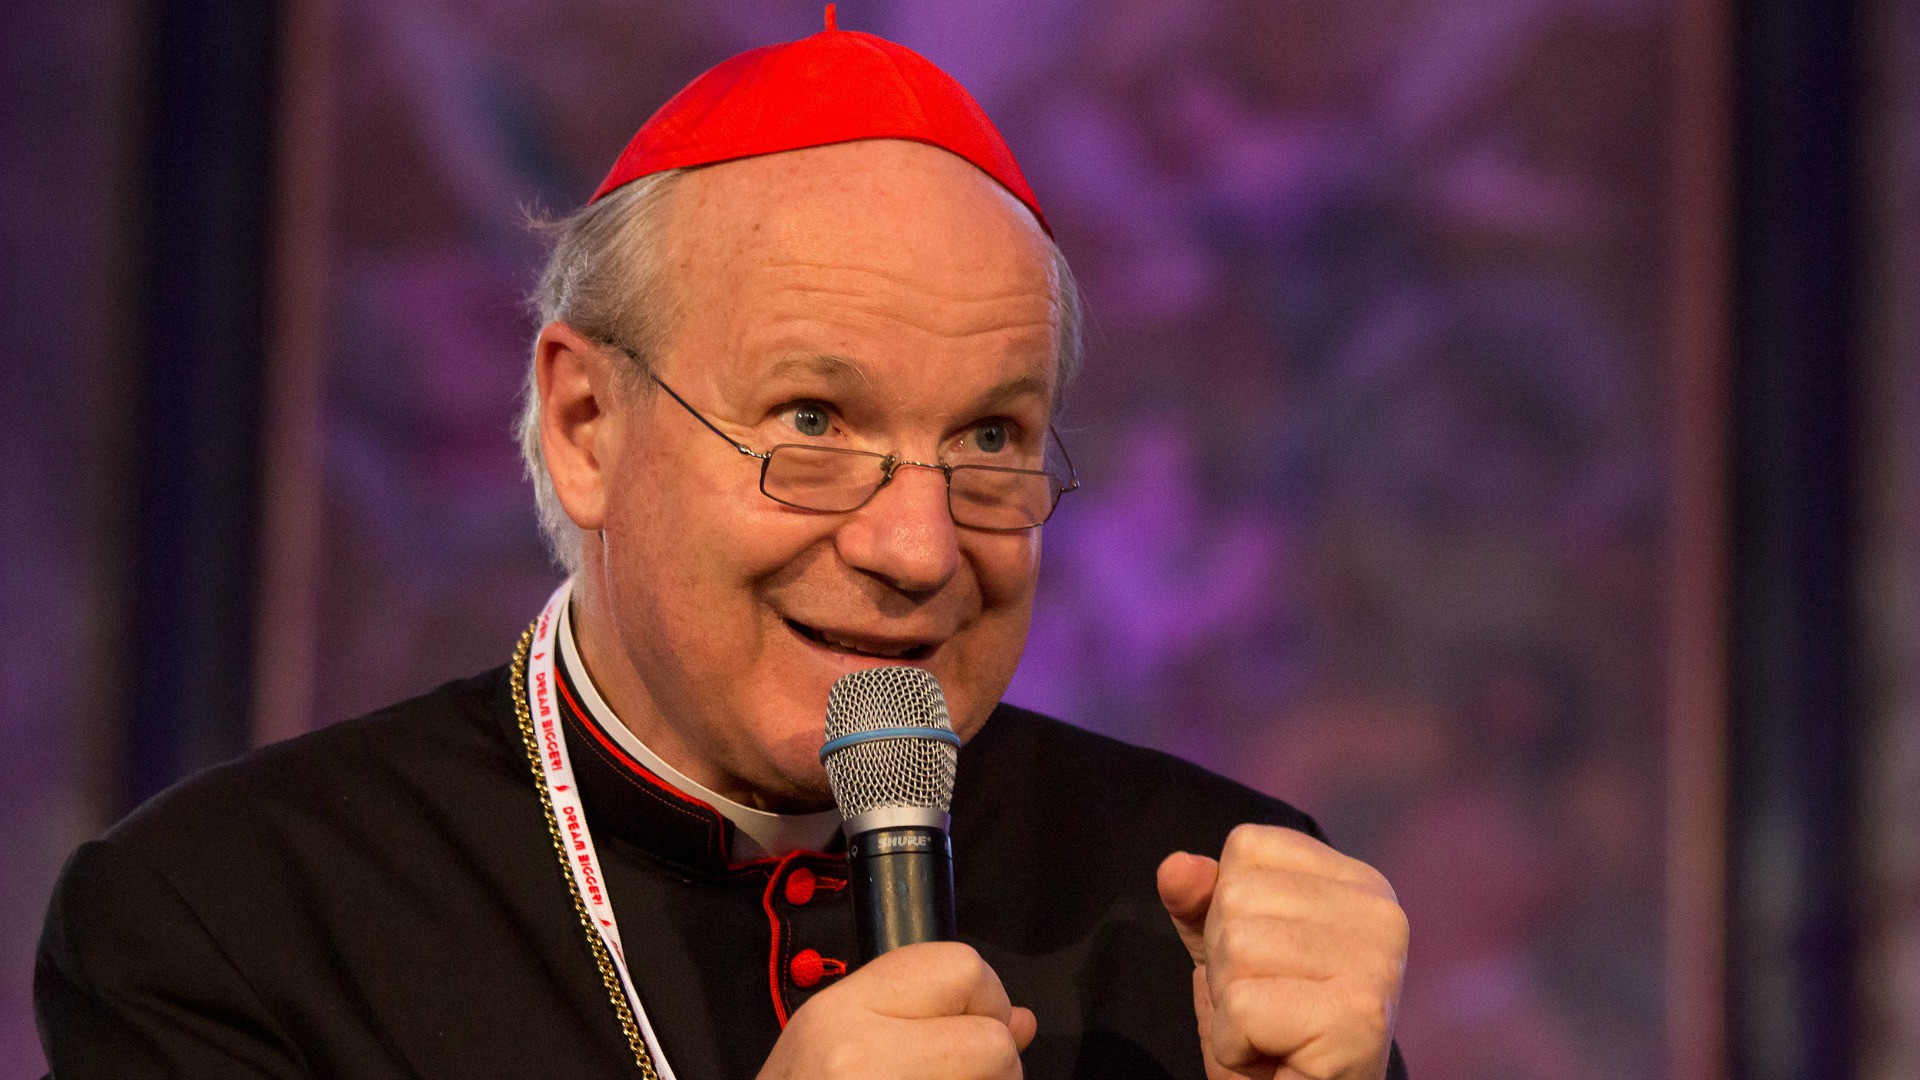 Le cardinal Christoph Schönborn: "Ce  synode sera un chemin laborieux". (Photo: Flickr/Cornelius Inama/CC BY-NC-ND 2.0)